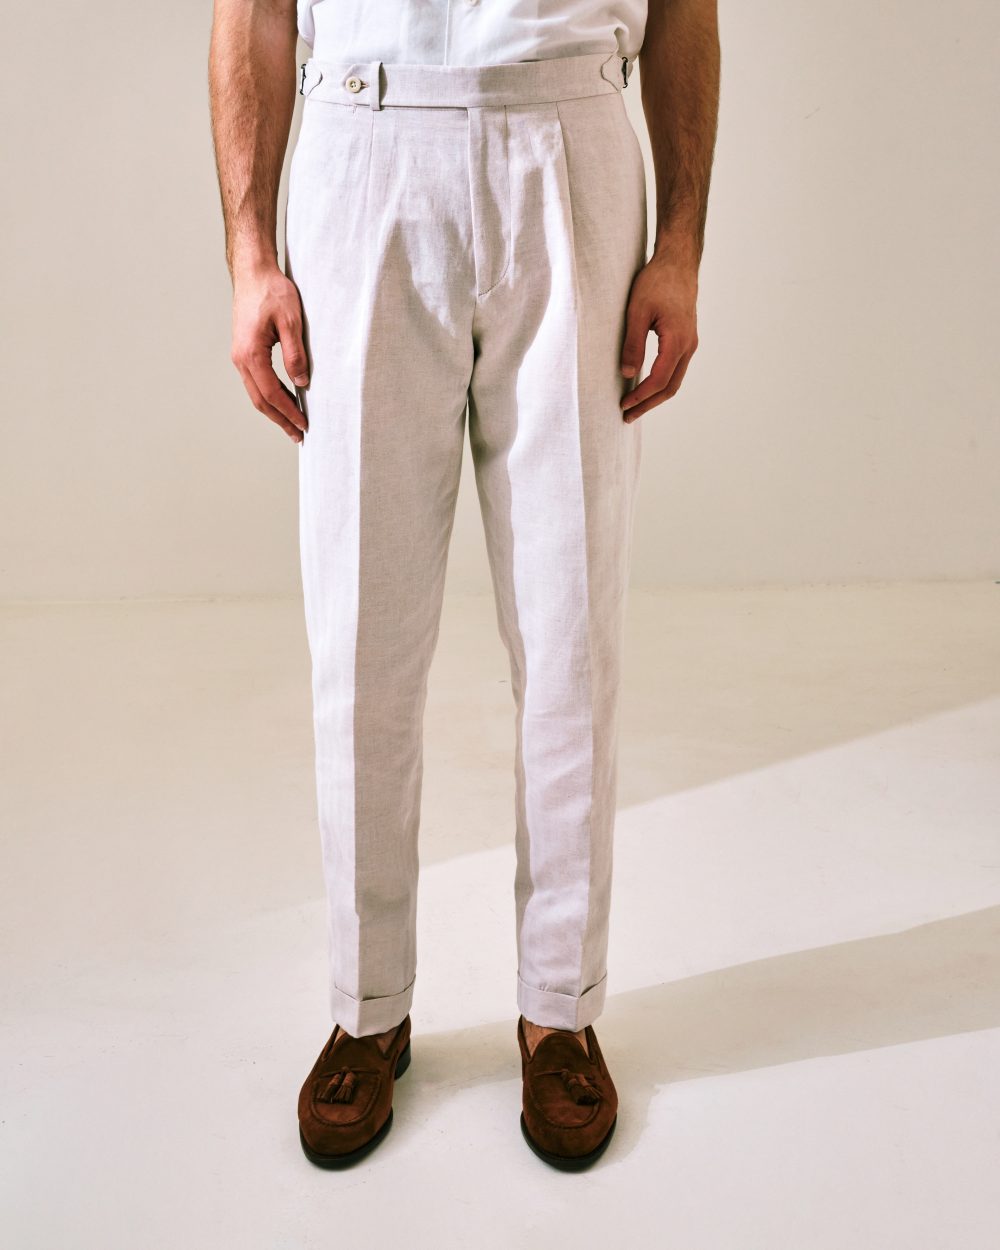 Pantalon Coupe Une Pince S3 / Coton & lin chevrons